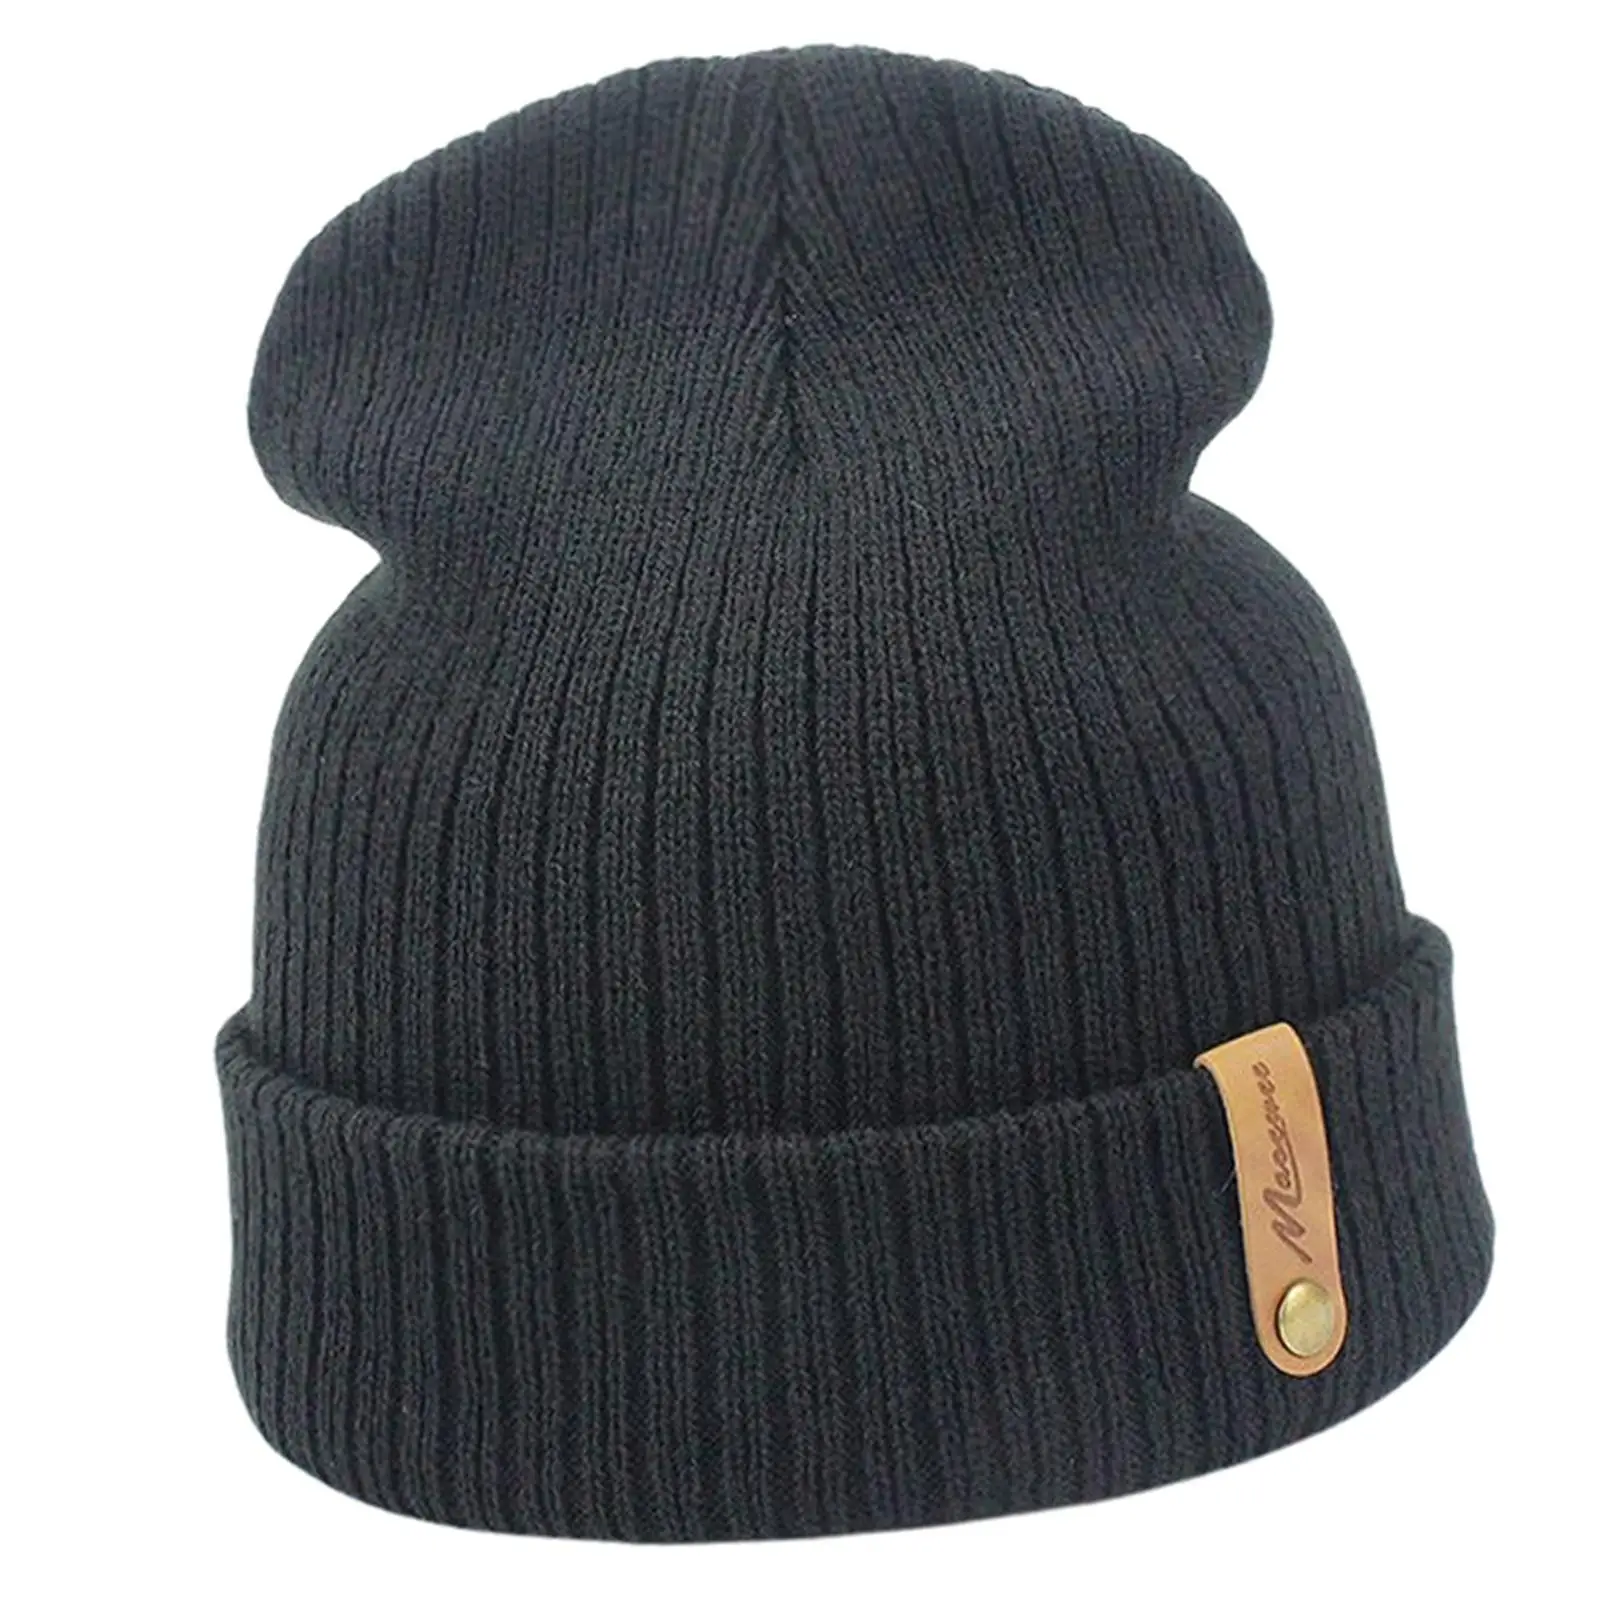 Soft Winter Beanie Warm Knit Hat Slouchy Baggy Beanie Unisex for Cycling Ski